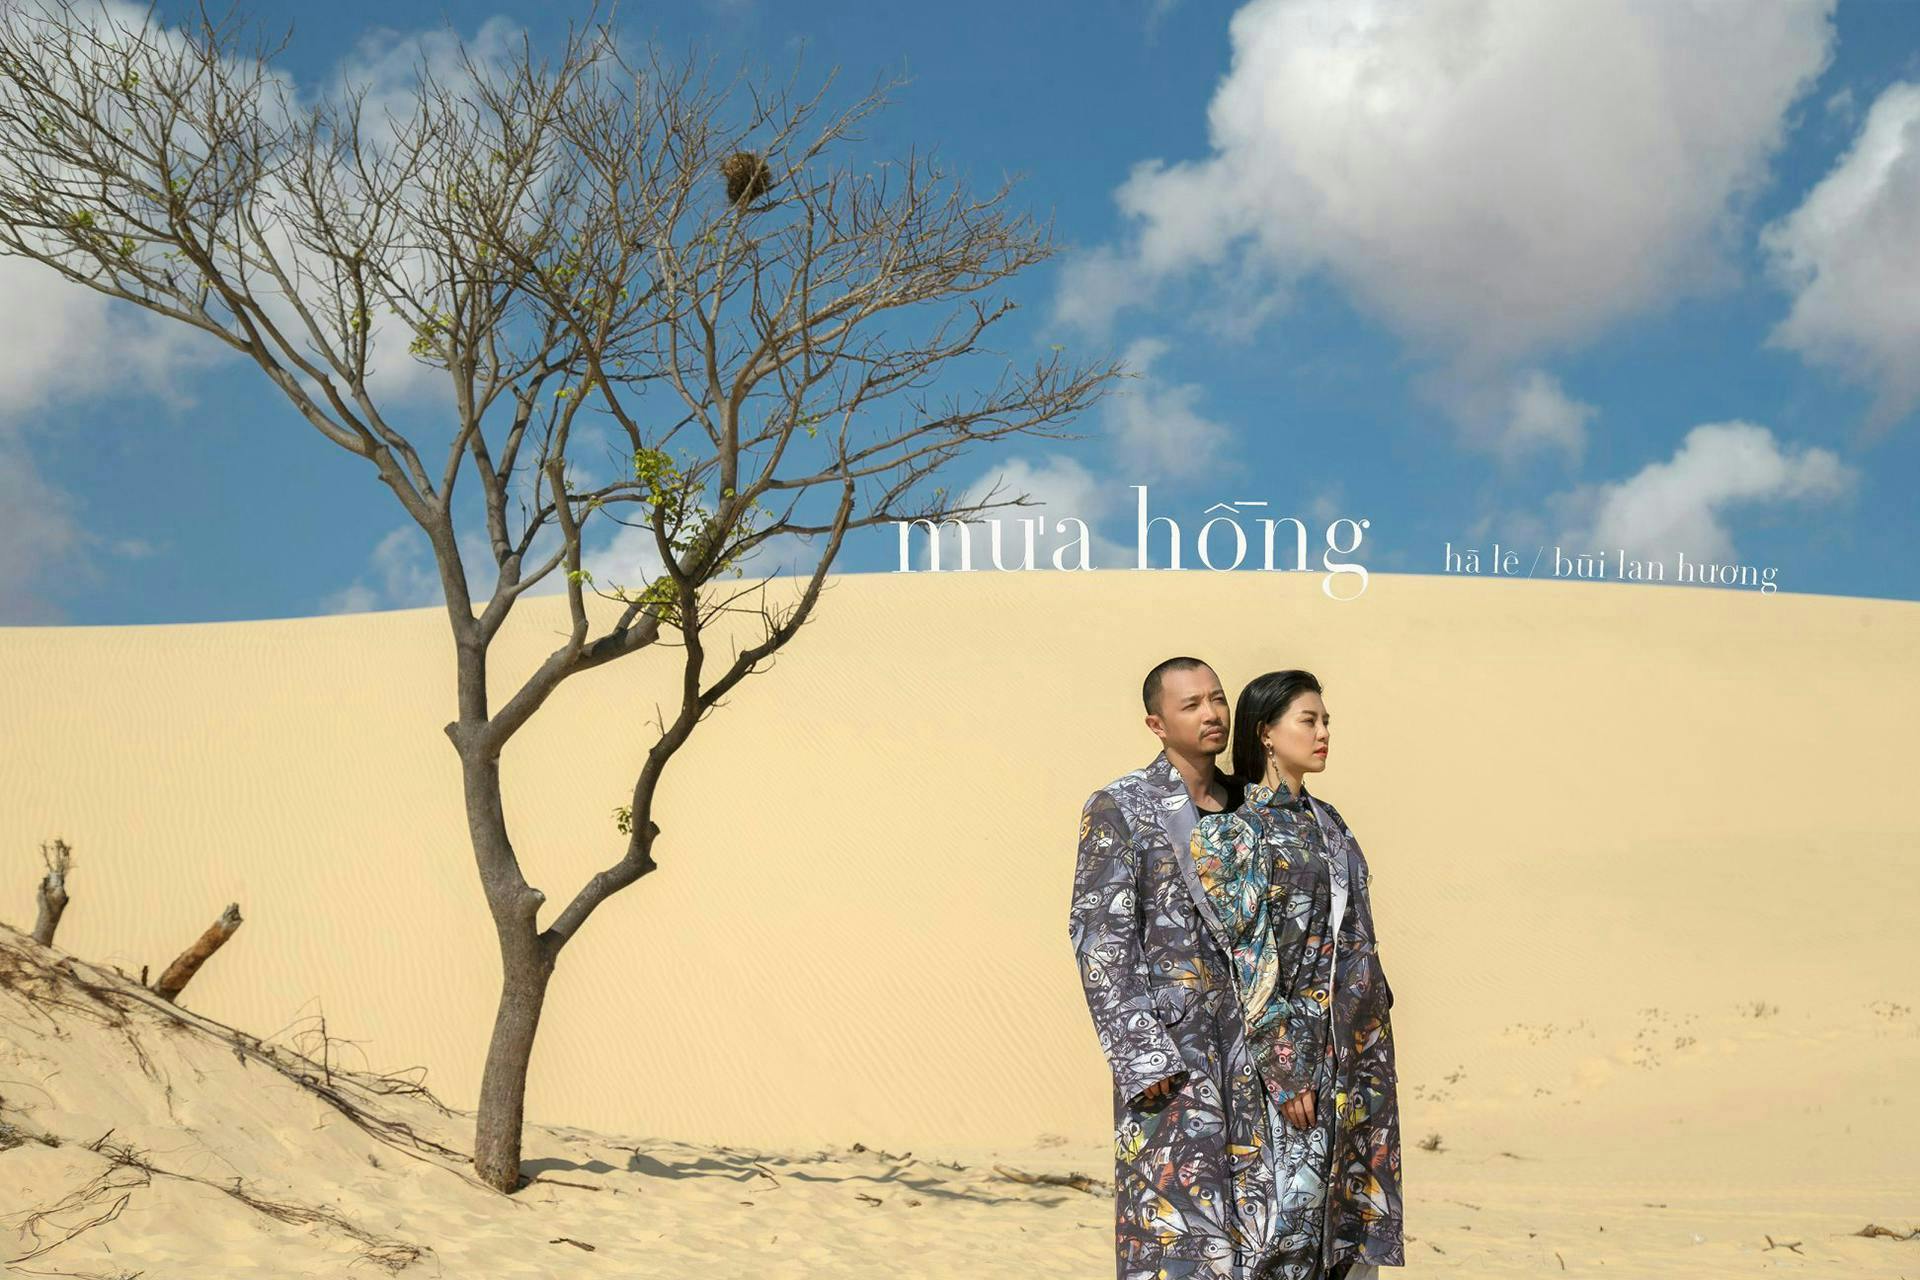 soil sand nature outdoors dune clothing apparel person human desert